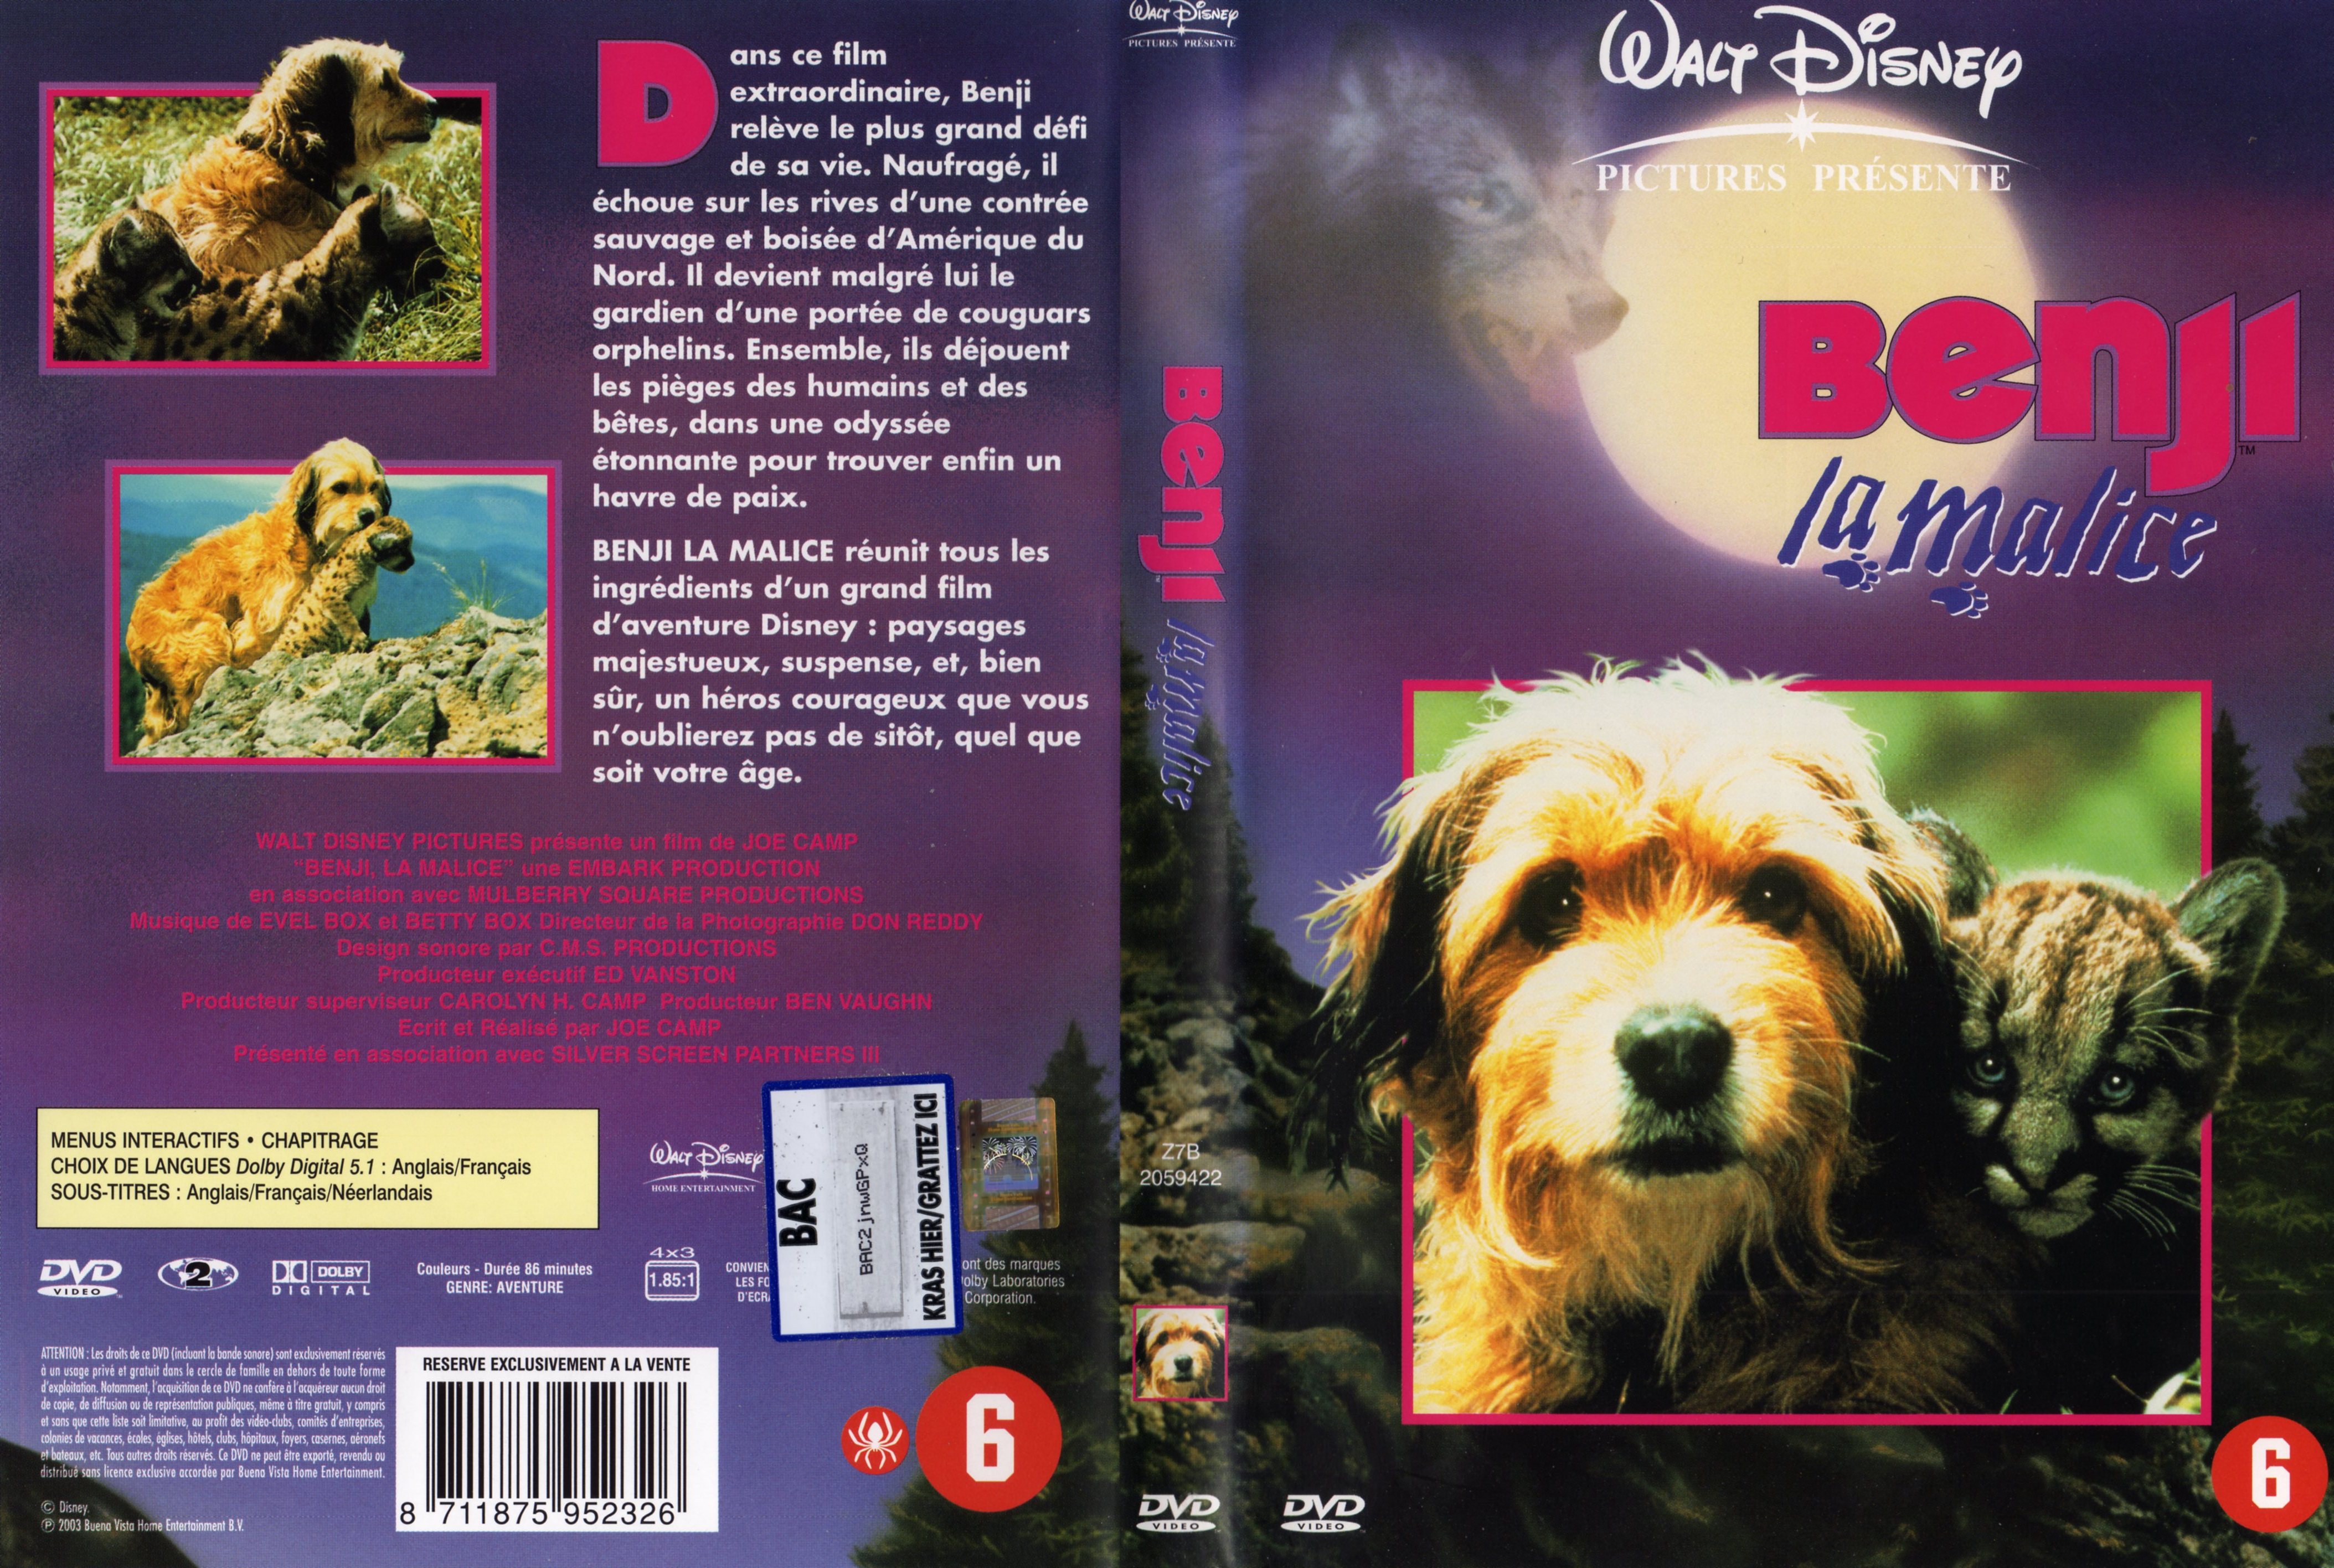 Jaquette DVD Benji la malice v2